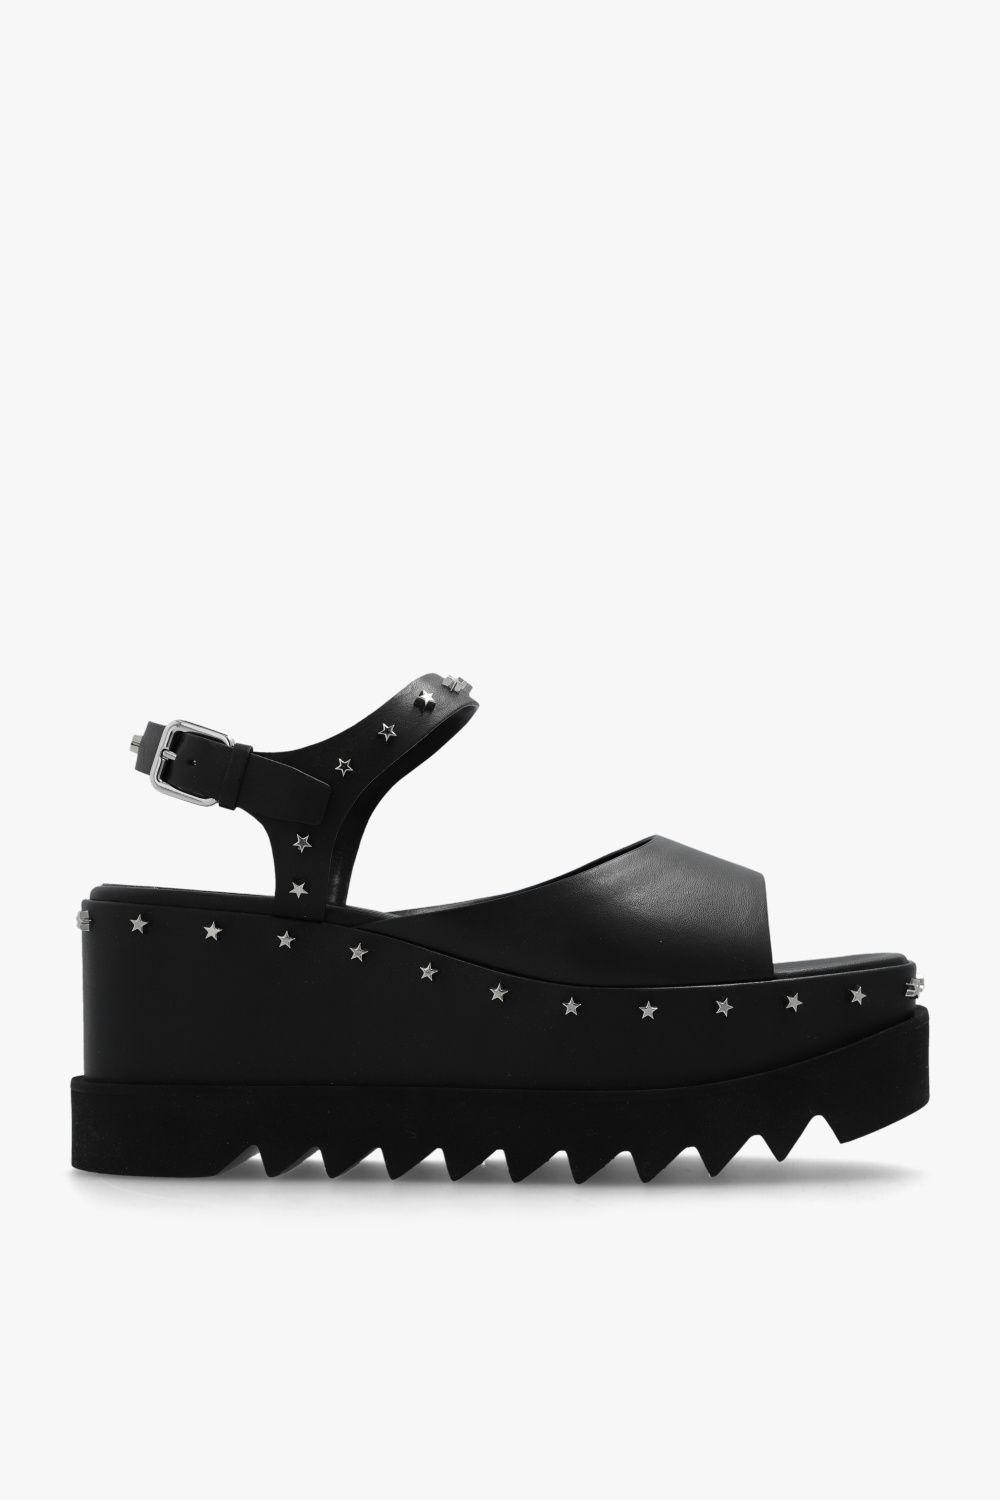 Stella McCartney 'elyse' Platform Sandals in Black | Lyst